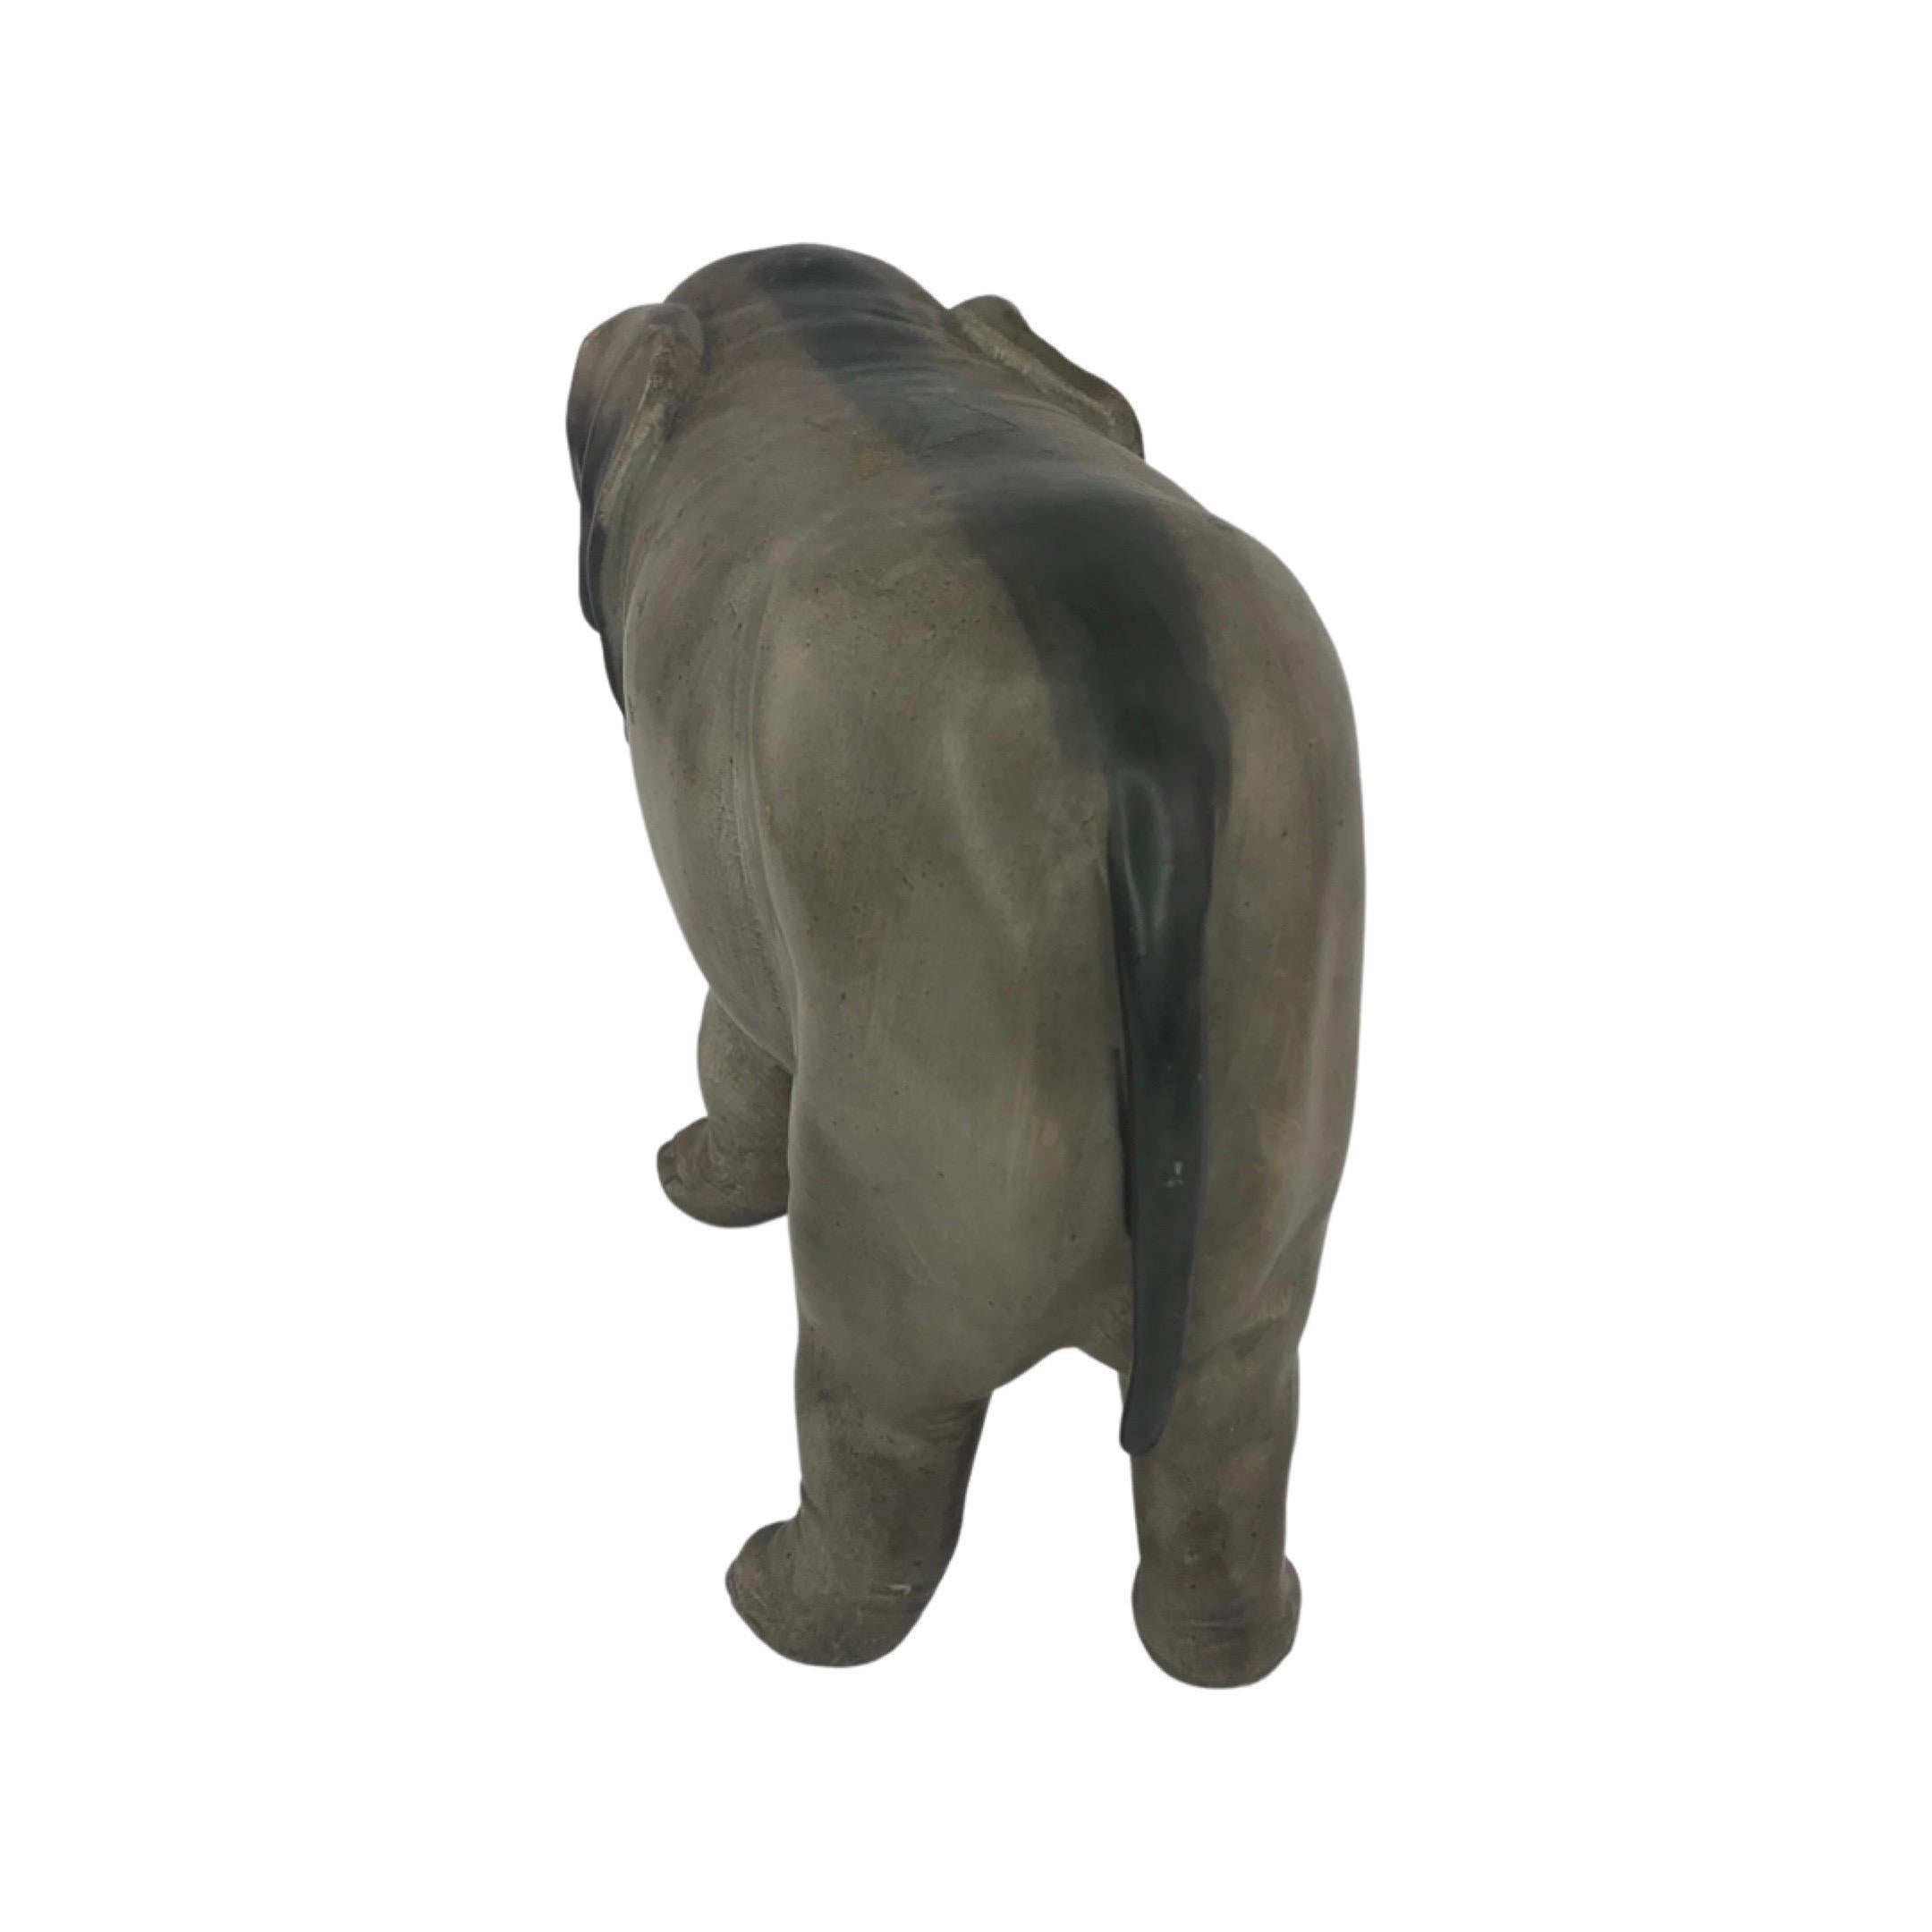 1920s German Ceramic Elephants Figures- Pair For Sale 1